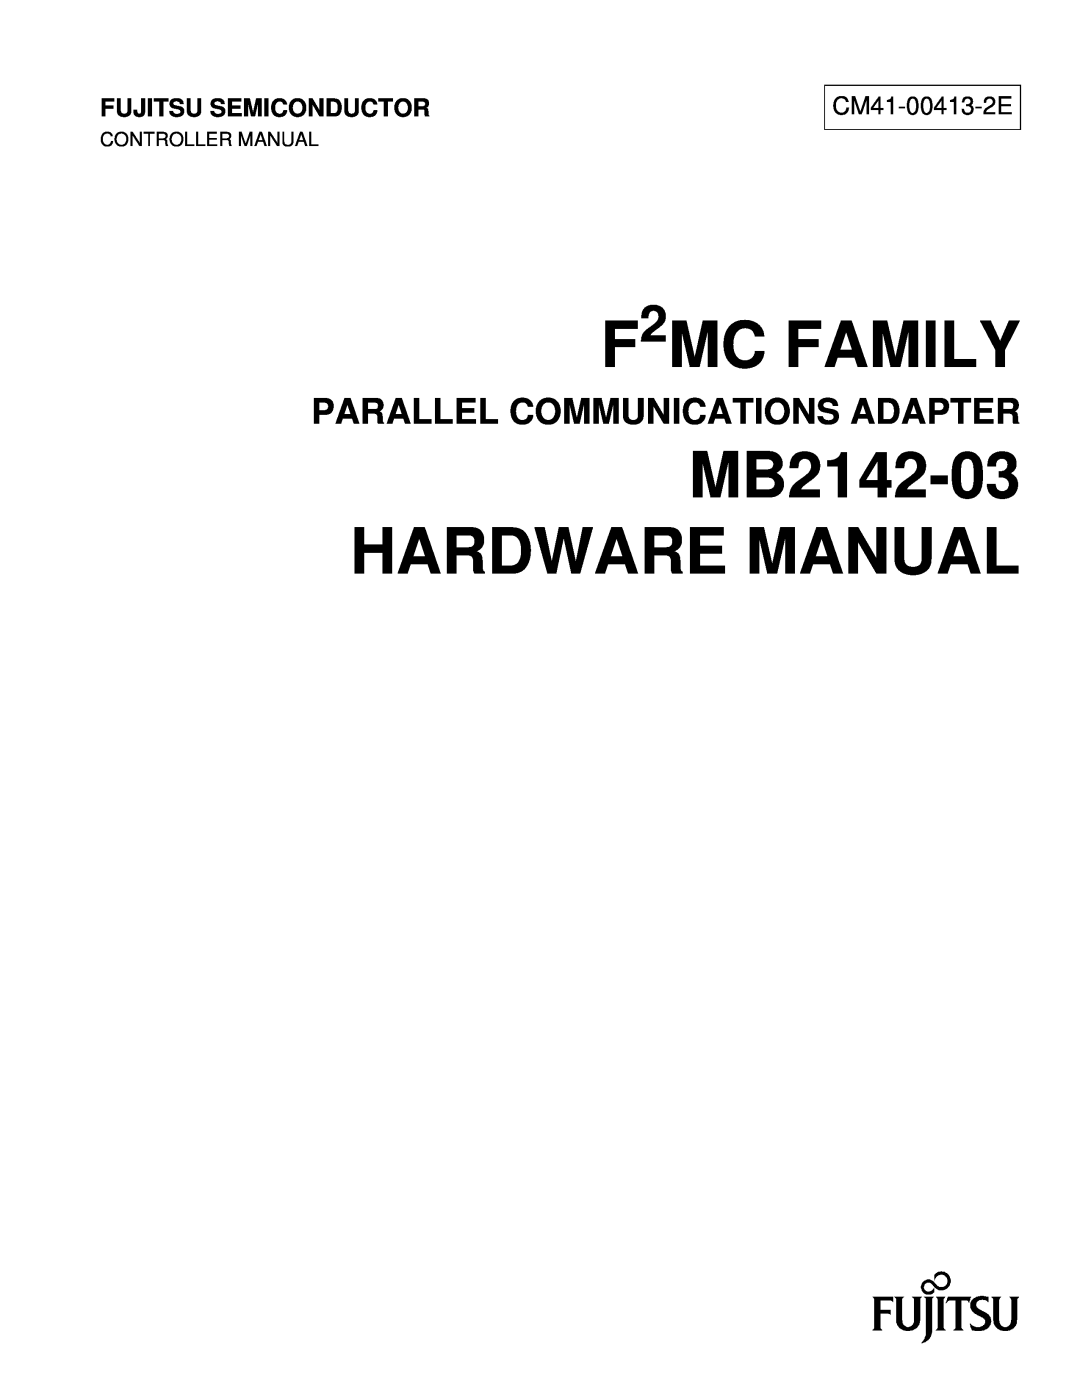 Fujitsu manual F2MC FAMILY, MB2142-03 HARDWARE MANUAL, Parallel Communications Adapter, Fujitsu Semiconductor 